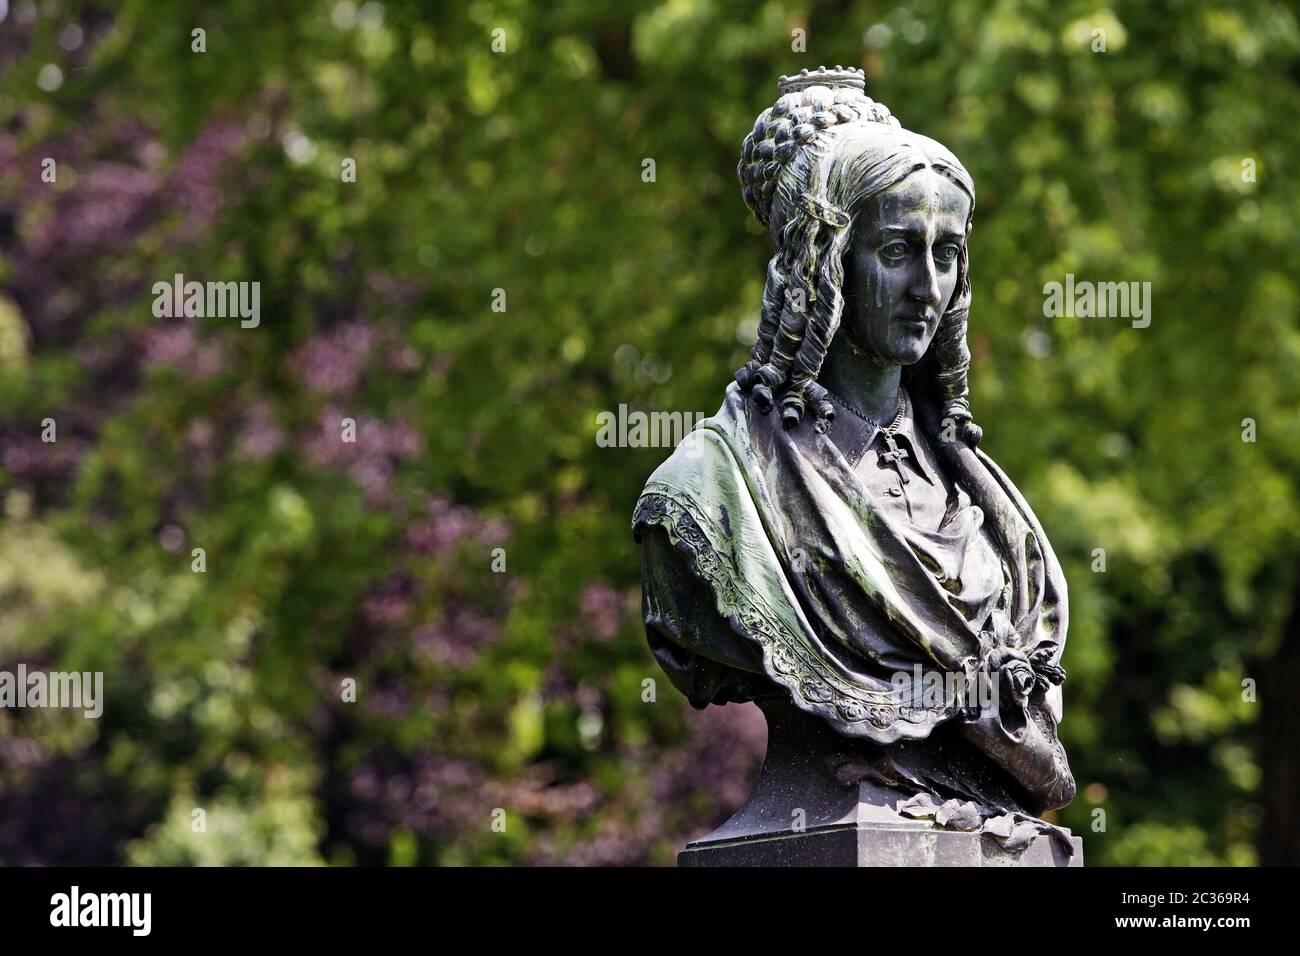 Bust of Annette von Droste-Hülshoff, Burg Hülshoff Castle, Havixbeck, Germany, Europe Stock Photo